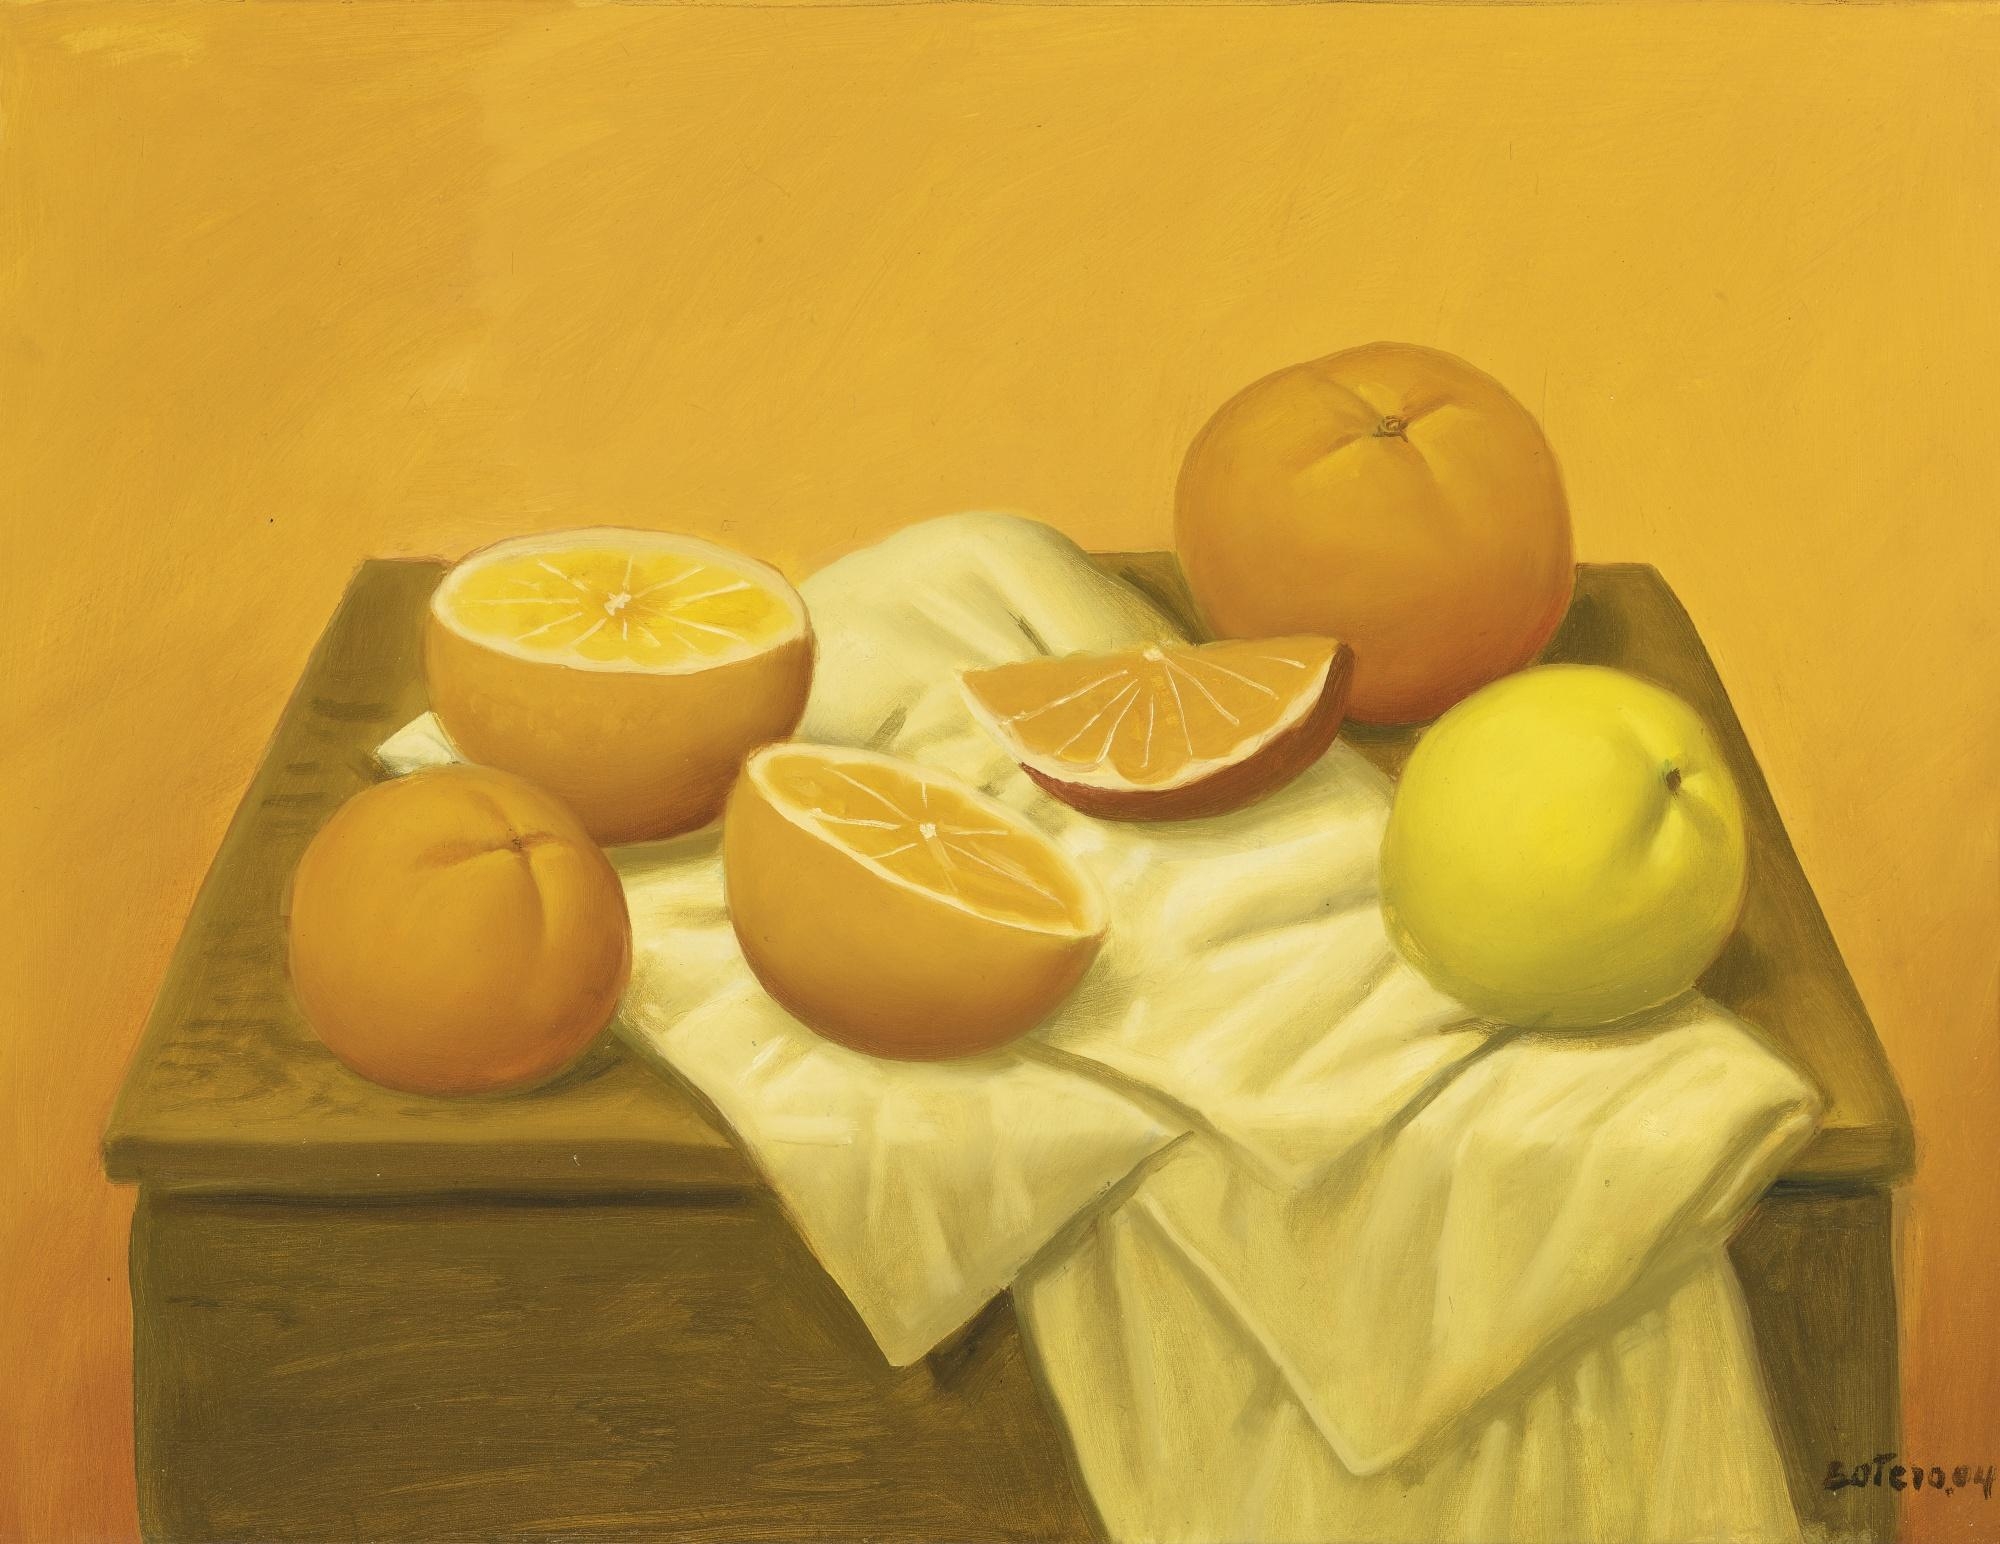 Oranges by Fernando Botero, 2004